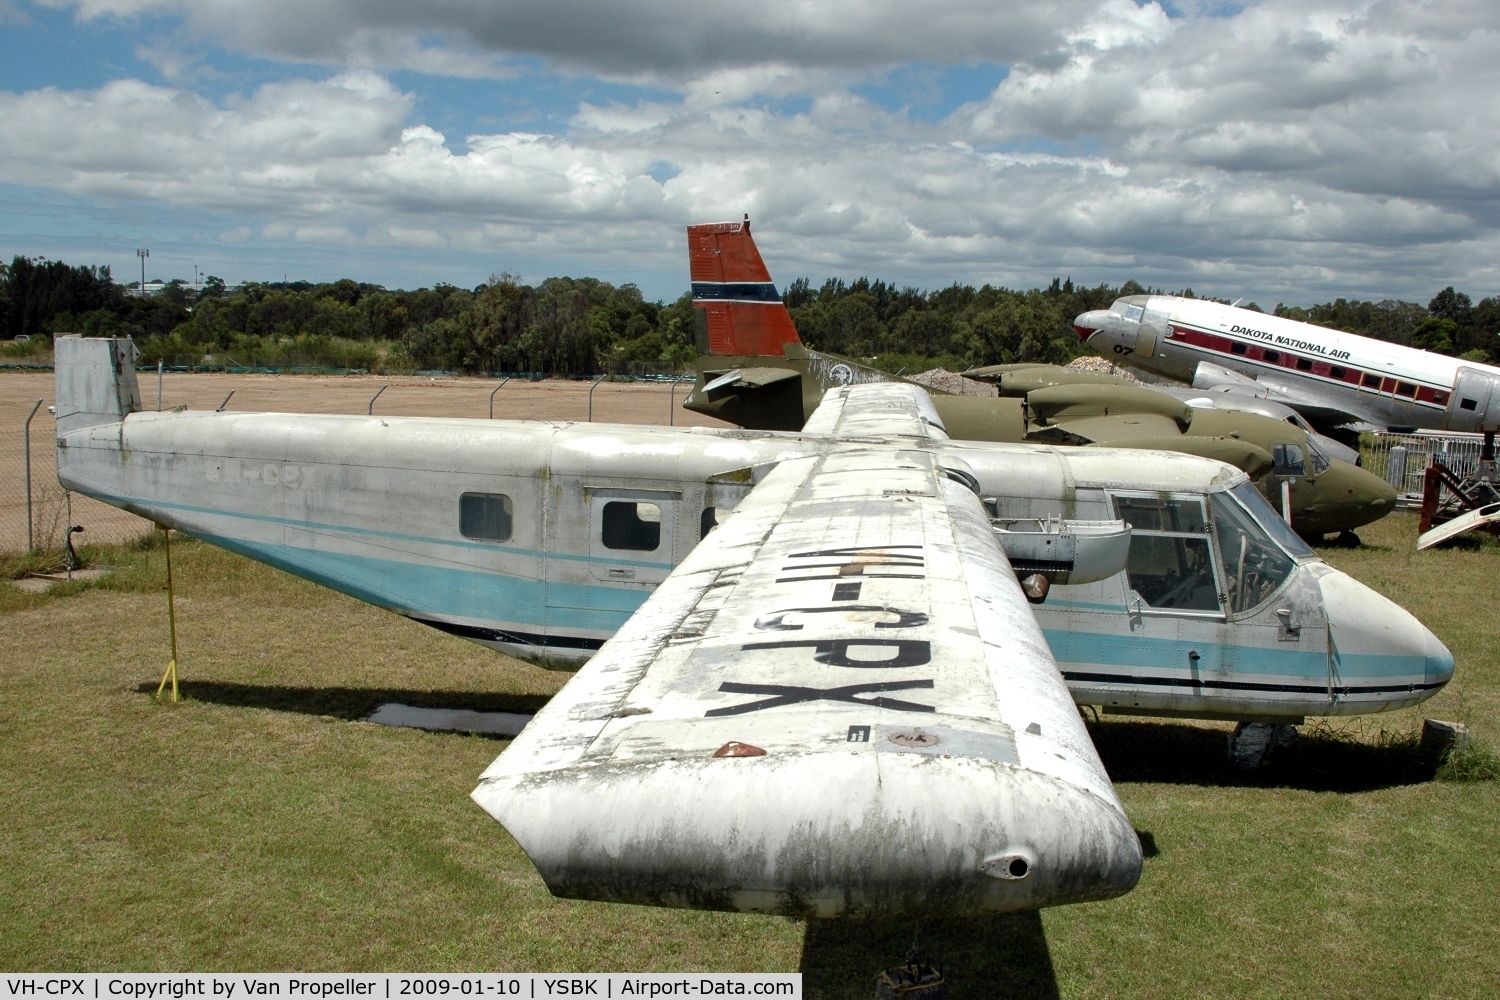 VH-CPX, 1977 GAF N22B Nomad C/N N22B-50, GAF N.22B Nomad at the Australian Aviation Museum at Bankstown airport, NSW, 2009